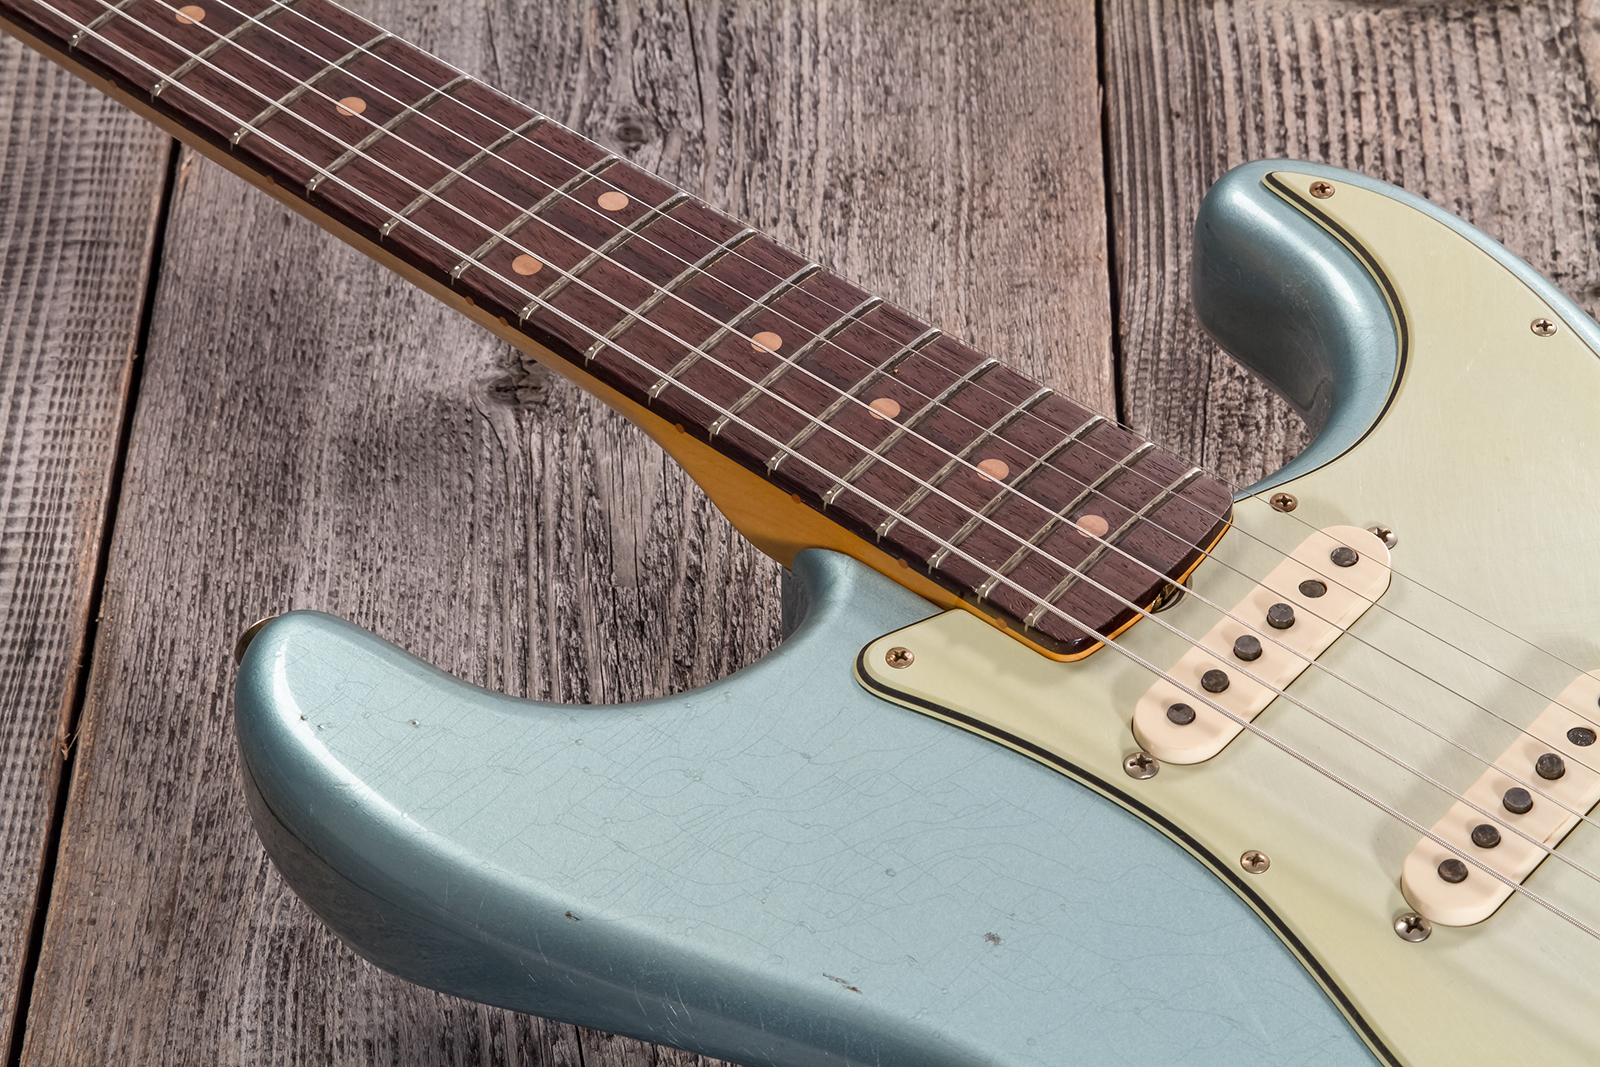 Fender Custom Shop Strat 1959 3s Trem Rw #cz570883 - Journeyman Relic Teal Green Metallic - Guitare Électrique Forme Str - Variation 3